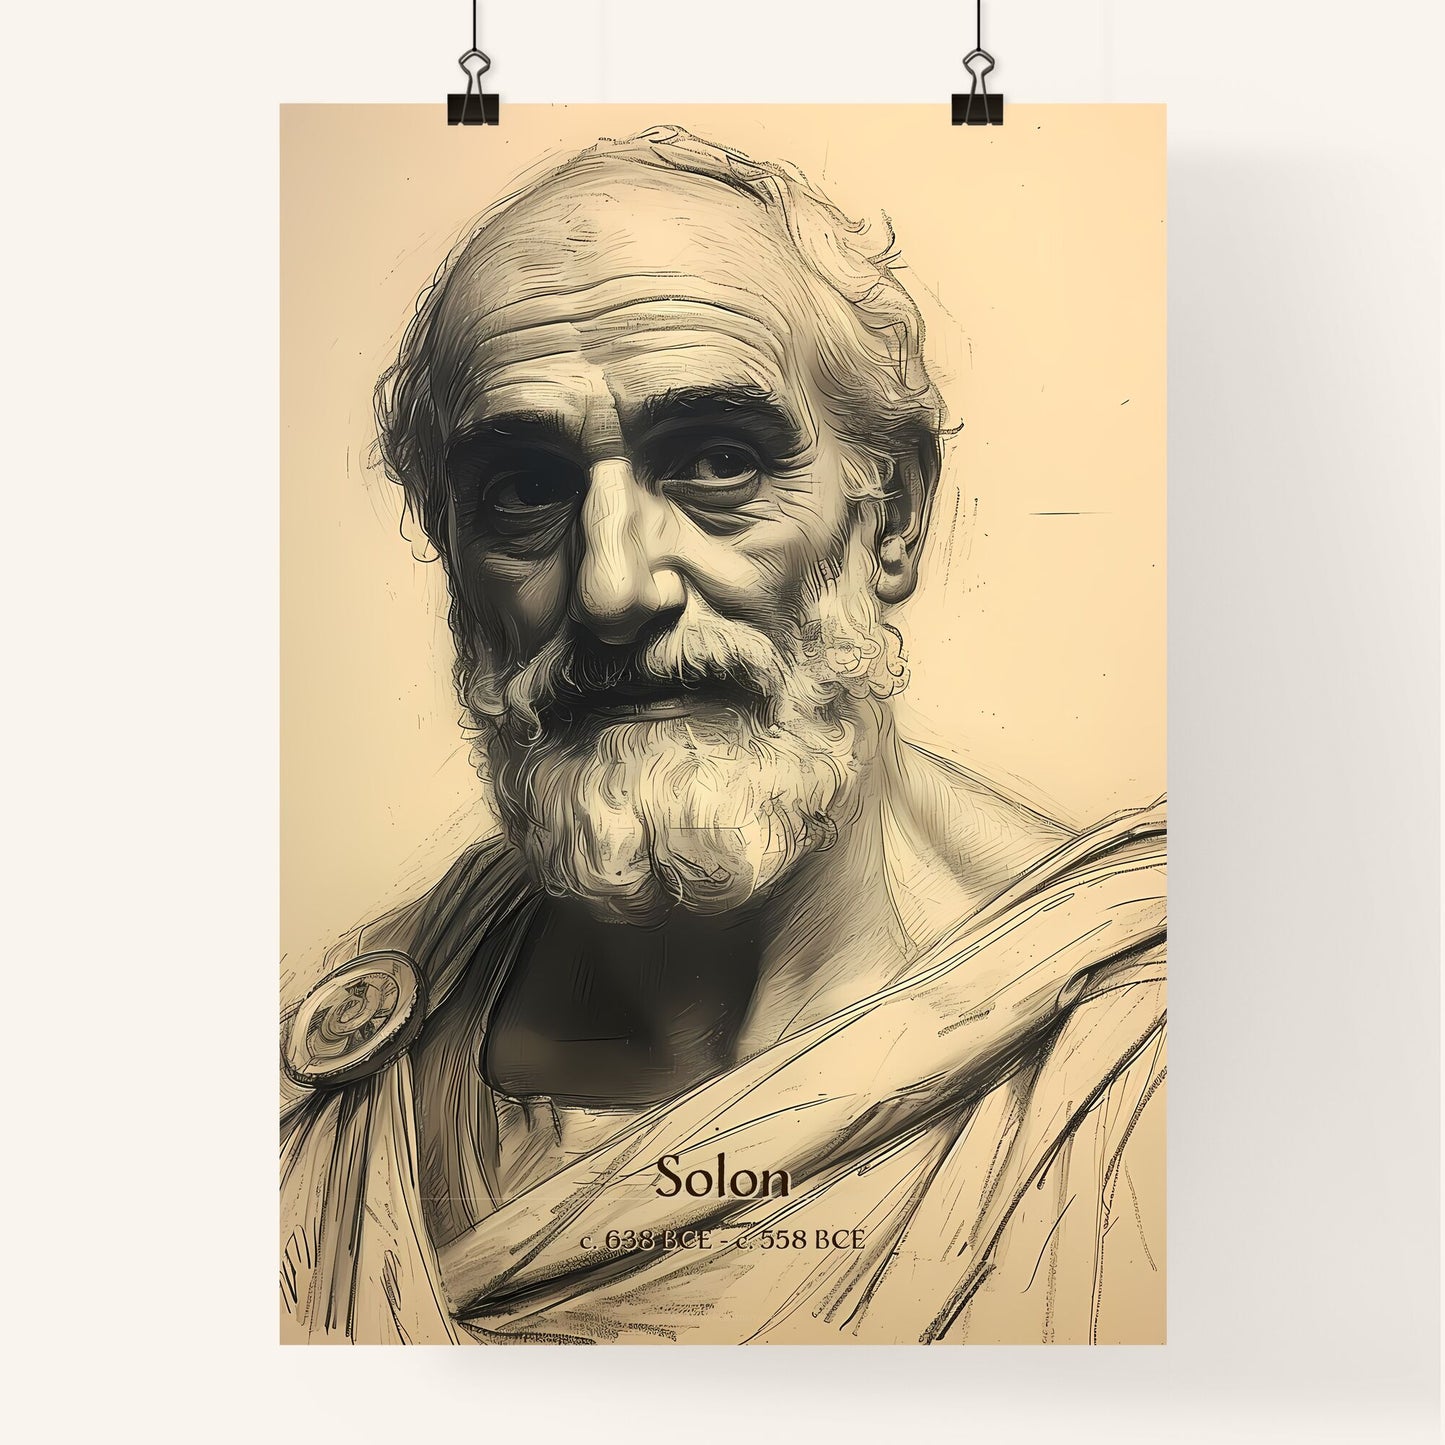 Solon, c. 638 BCE - c. 558 BCE, A Poster of a man with a beard Default Title